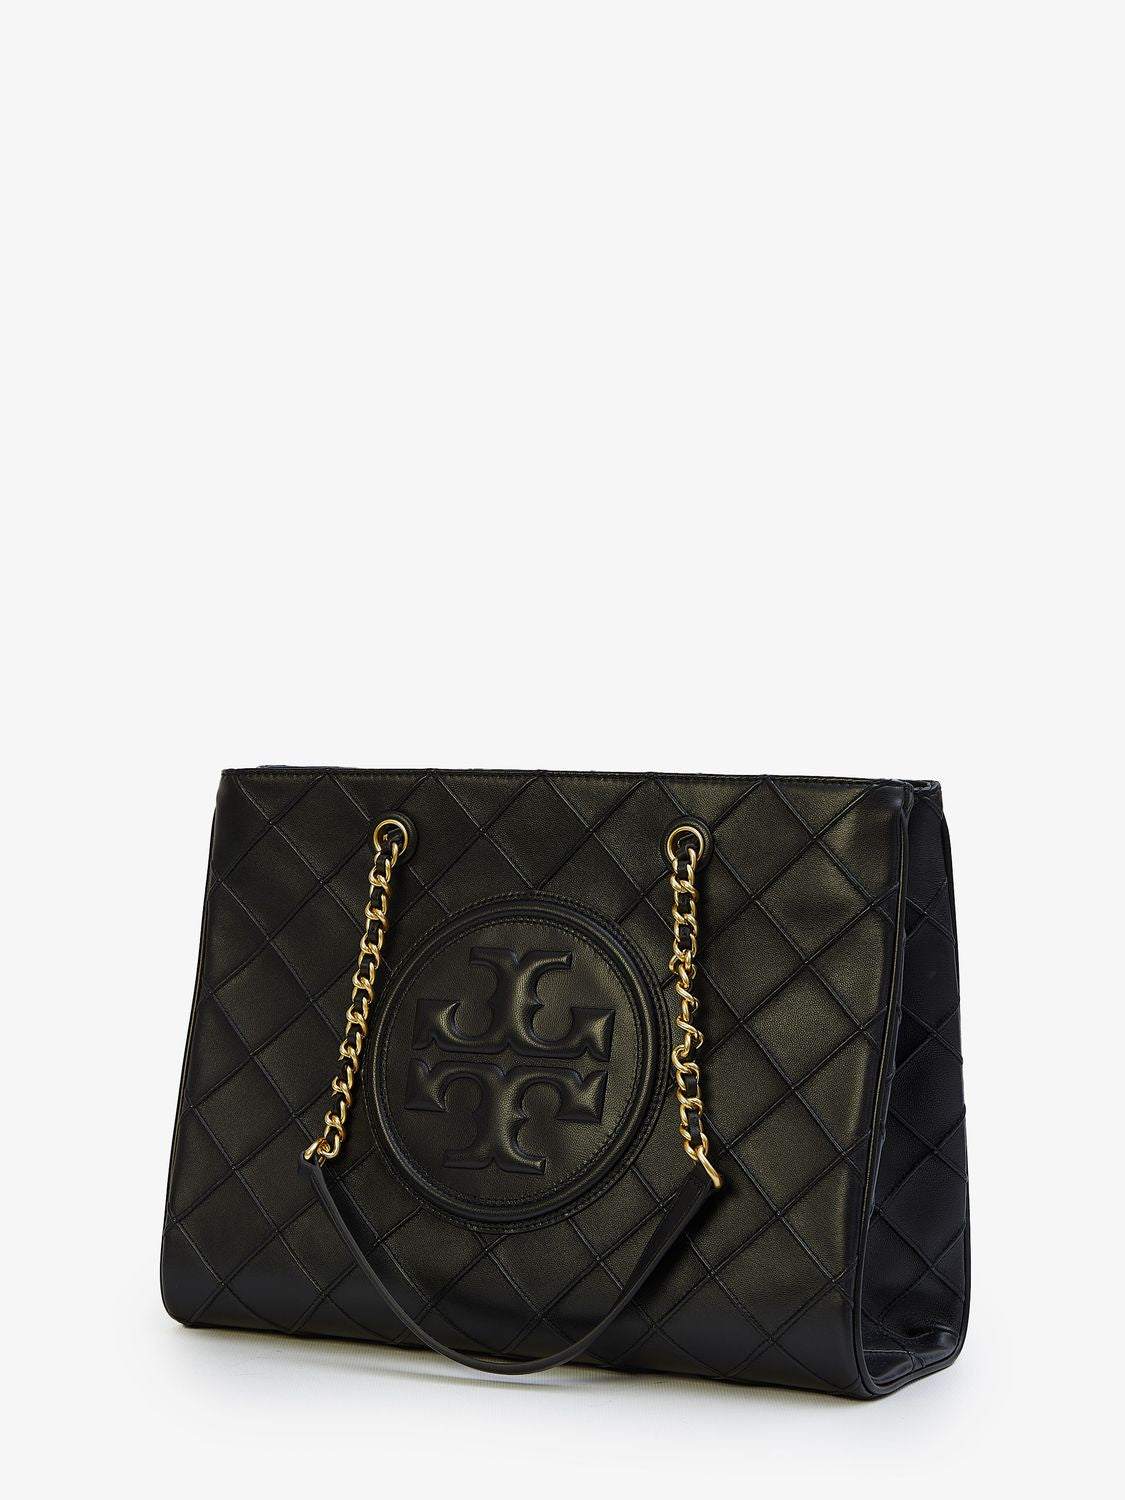 TORY BURCH Stylish Black Leather Tote Handbag for Women